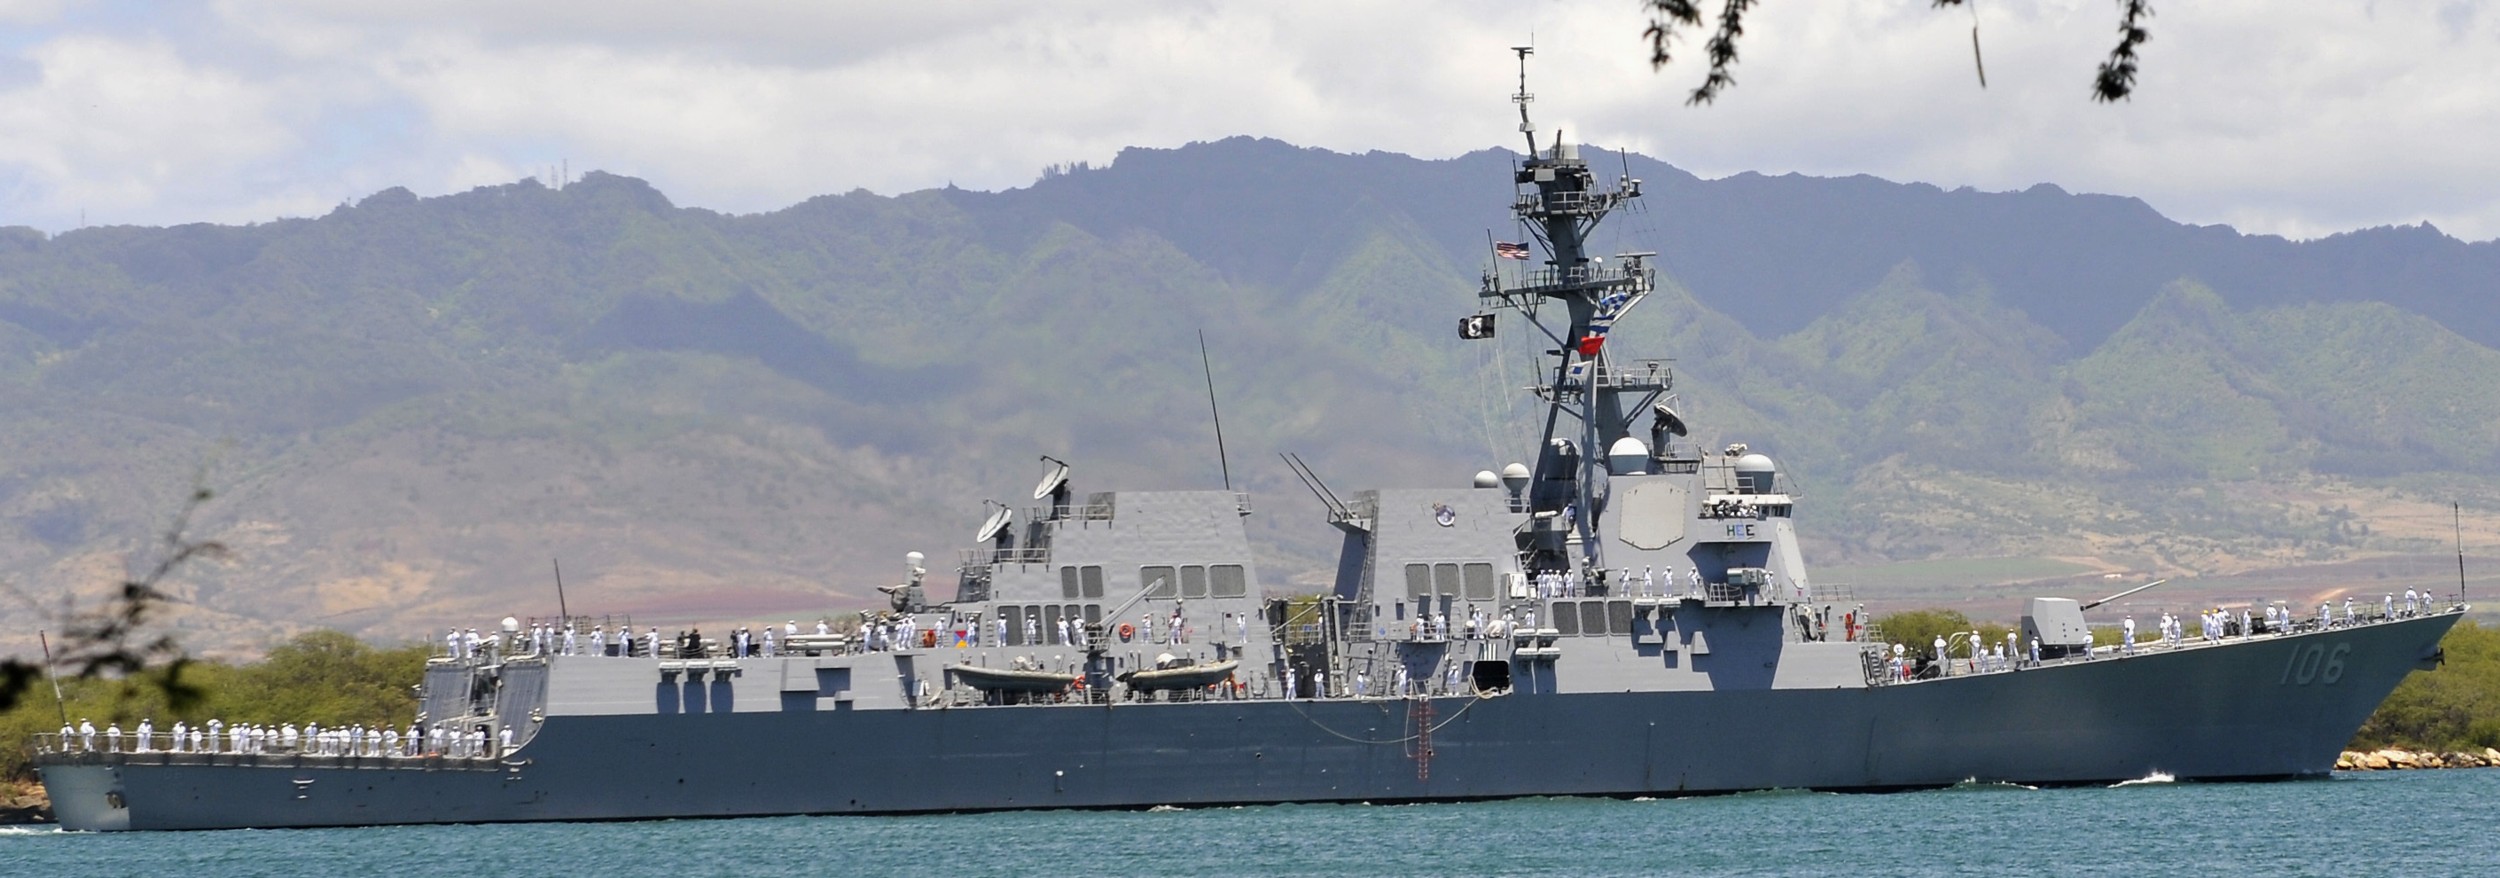 ddg-106 uss stockdale arleigh burke class guided missile destroyer aegis us navy pearl harbor hickam hawaii 71